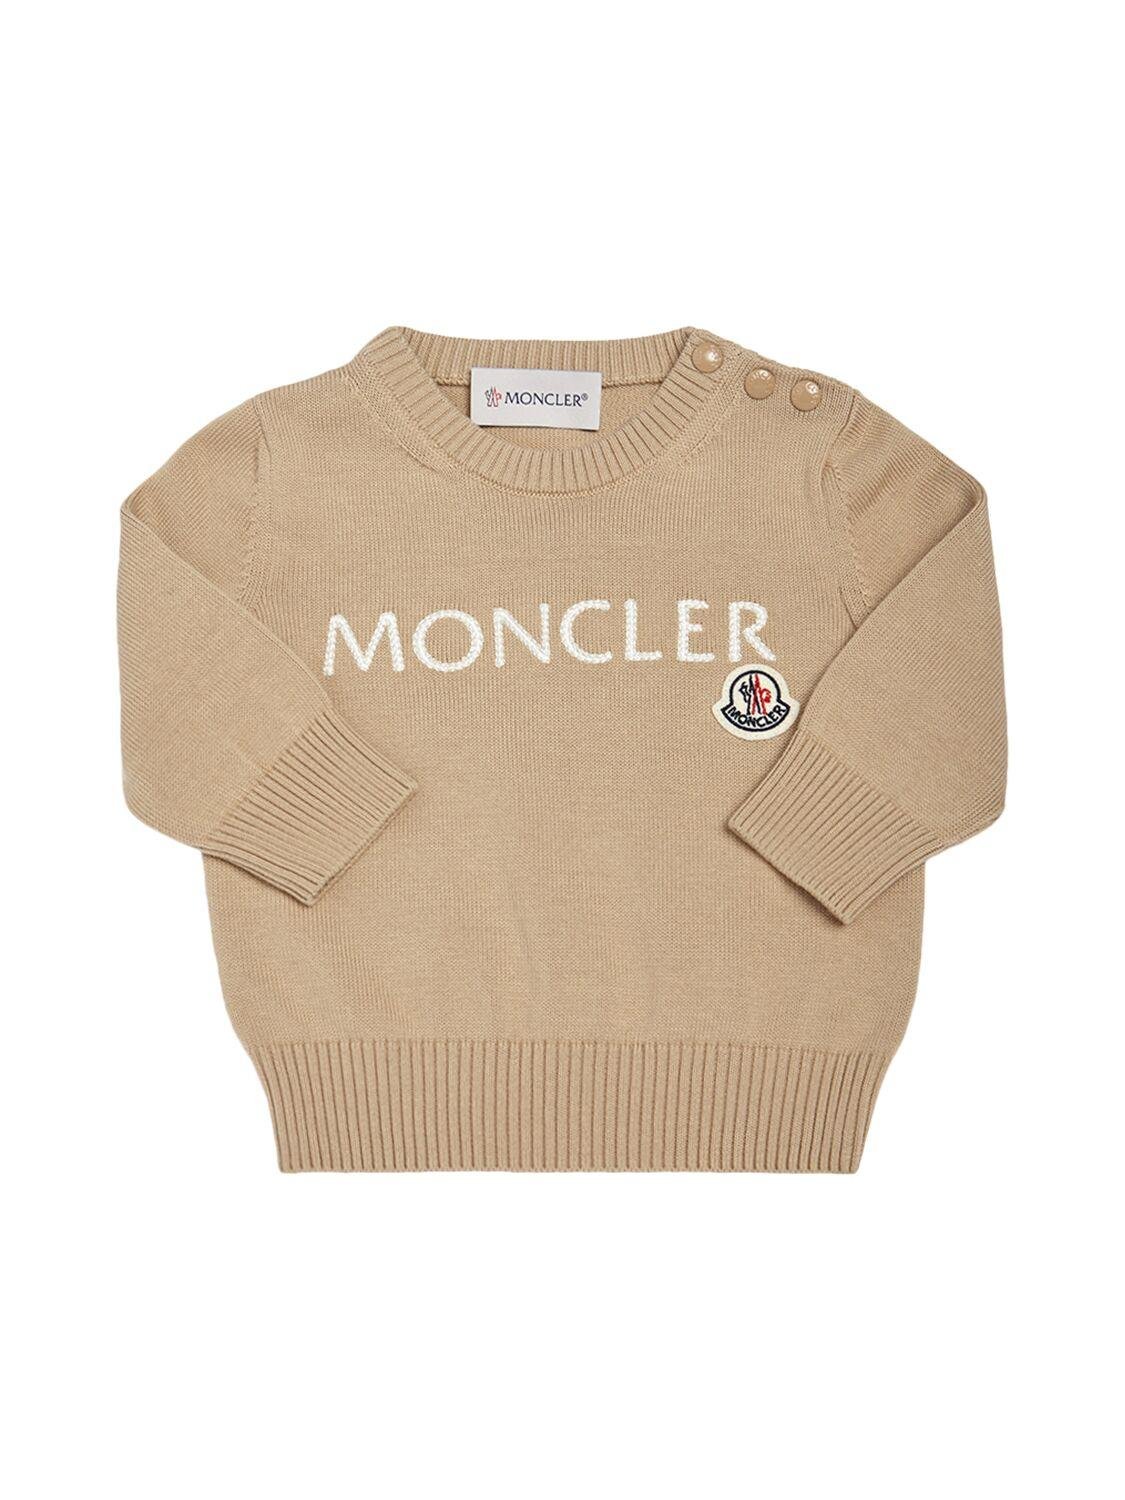 Cotton Knit Crewneck Sweater by MONCLER